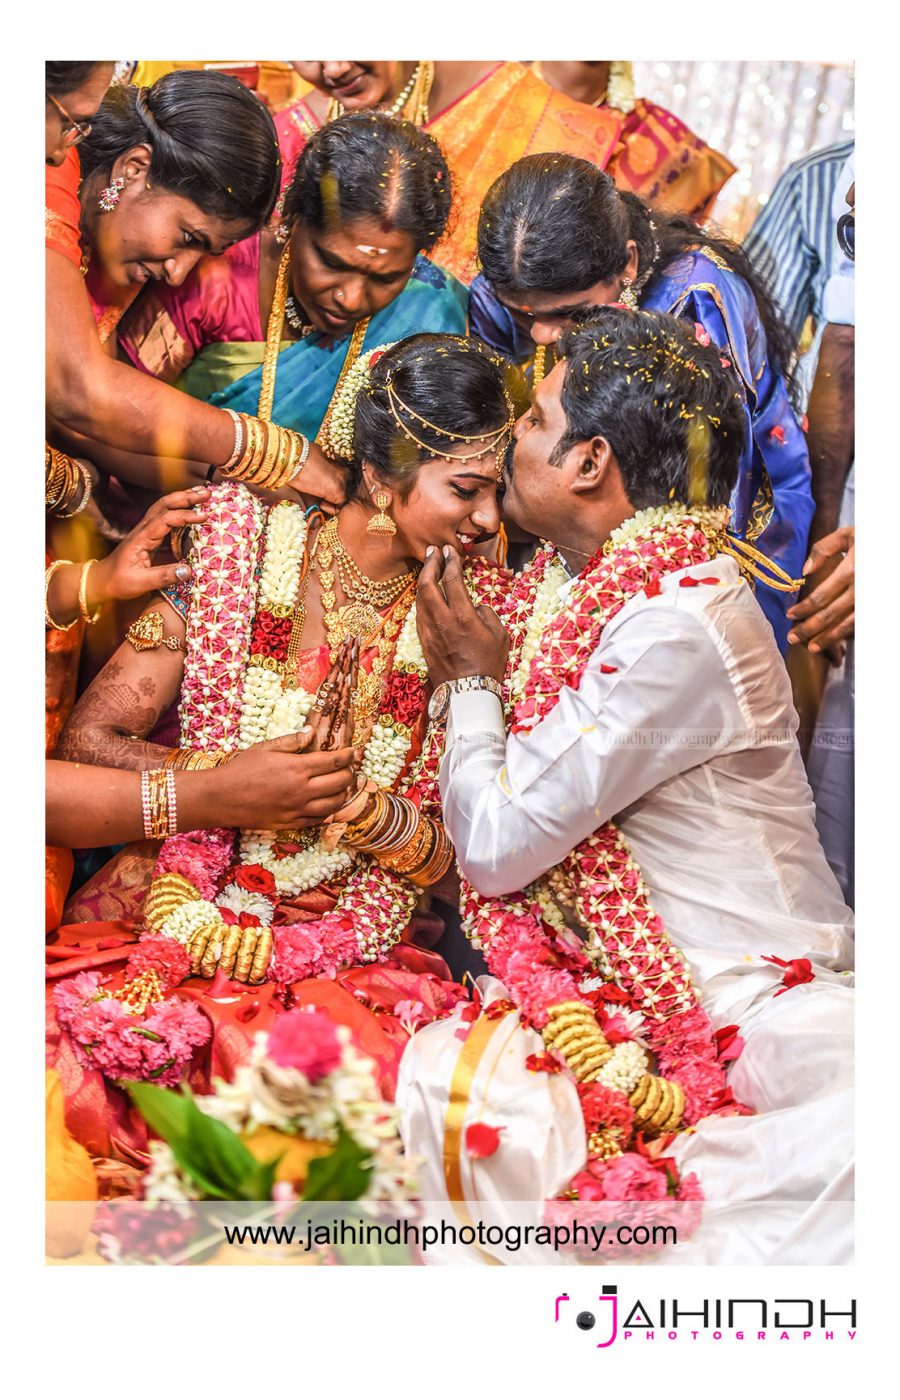 Candid photography in Madurai, Wedding Photography in Madurai, Best Photographers in Madurai, Candid wedding photographers in Madurai, Marriage photography in Madurai, Candid Photography in Madurai, Best Candid Photographers in Madurai. Videographers in Madurai, Wedding Videographers in Madurai.